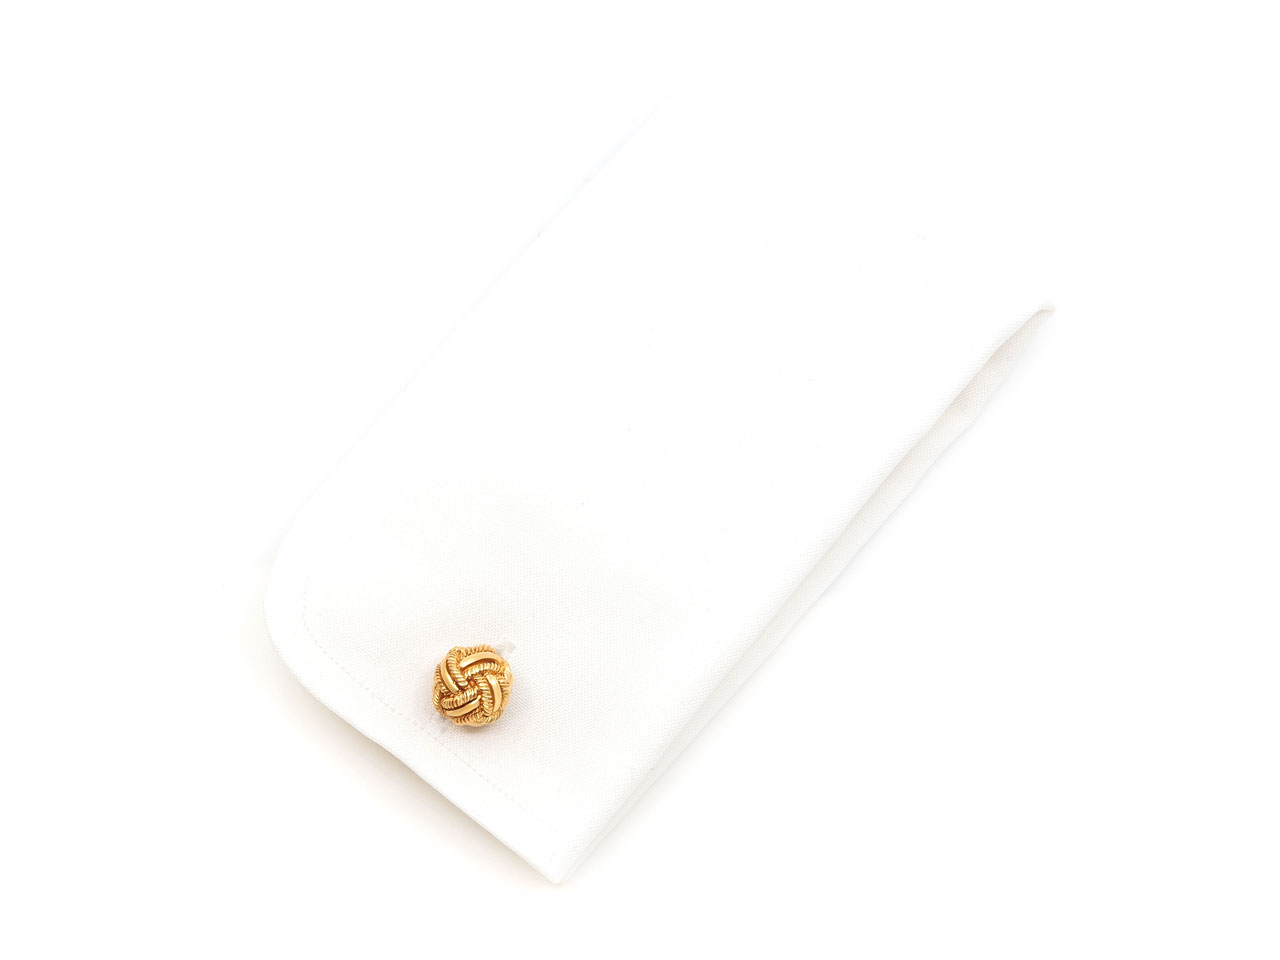 Tiffany & Co. Schlumberger 'Love Knot' Cufflinks in 18K Gold